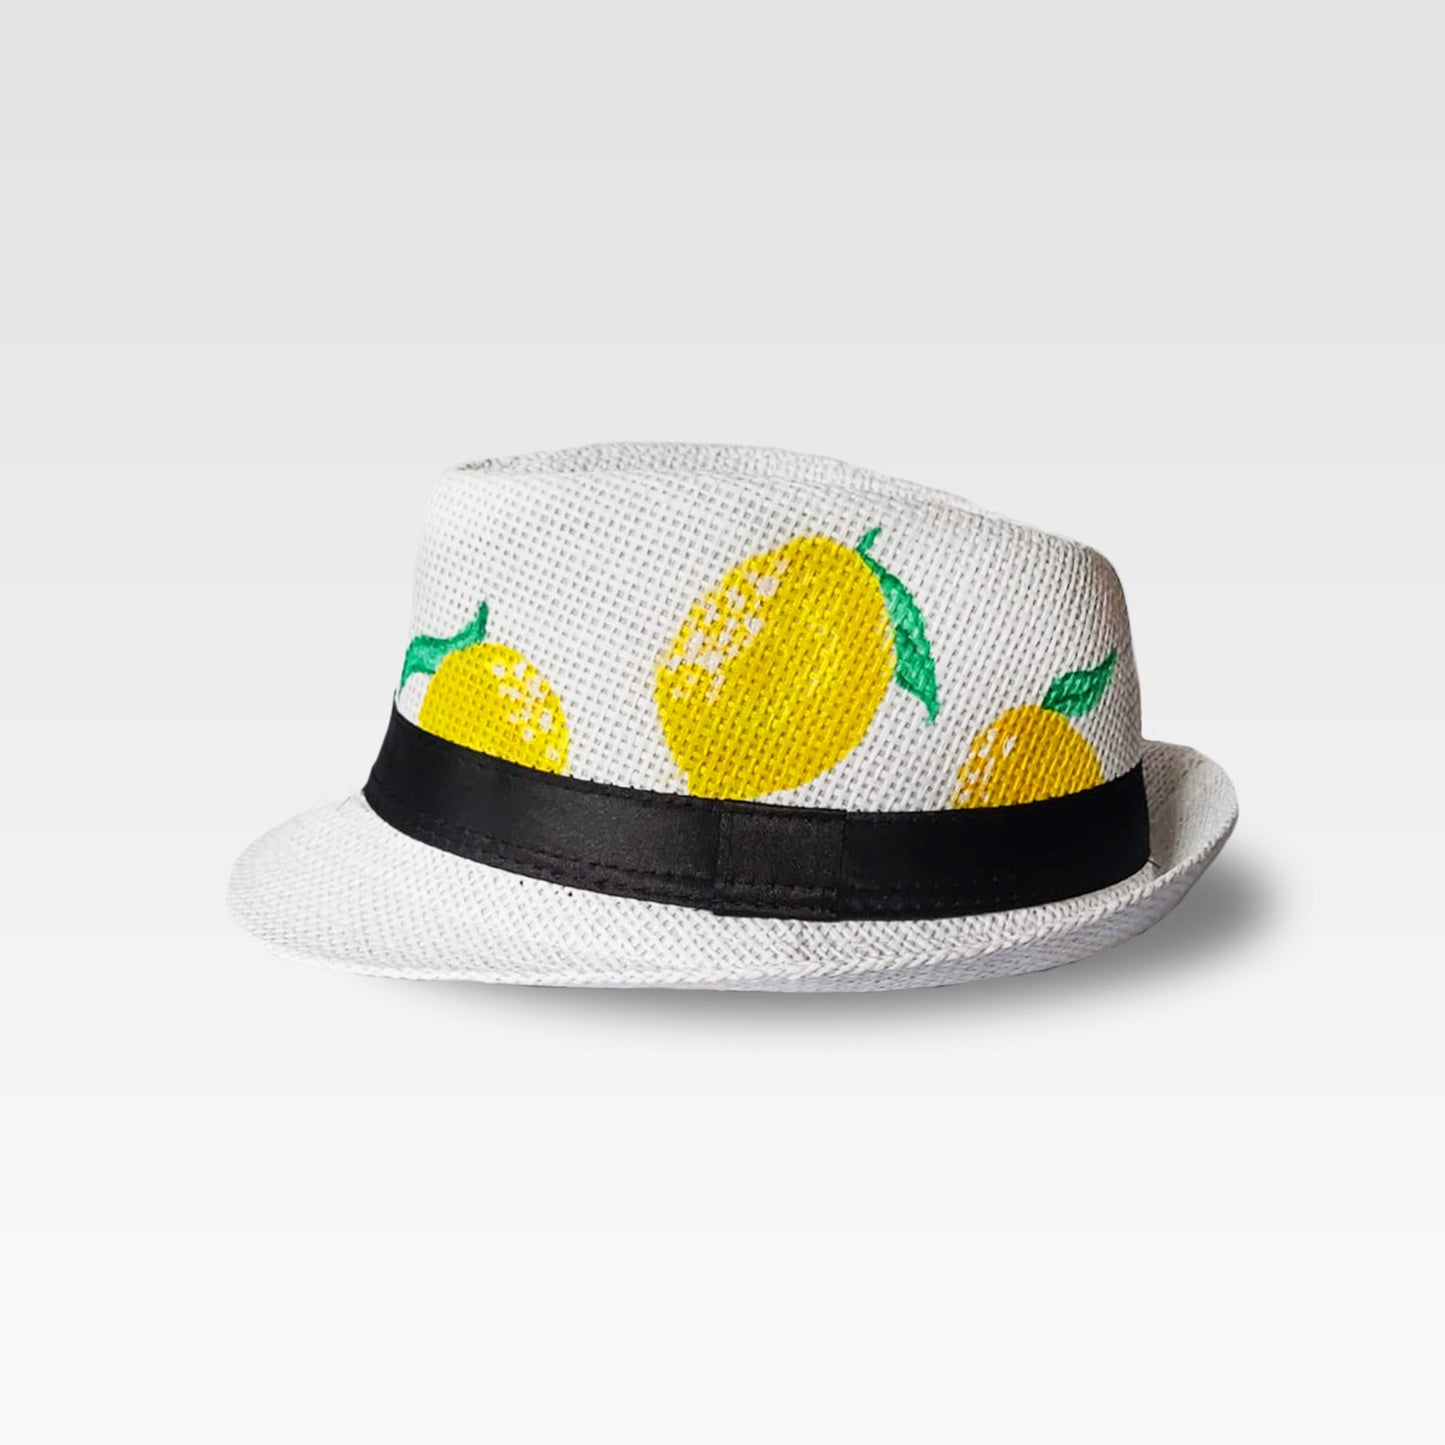 The Capri Hat